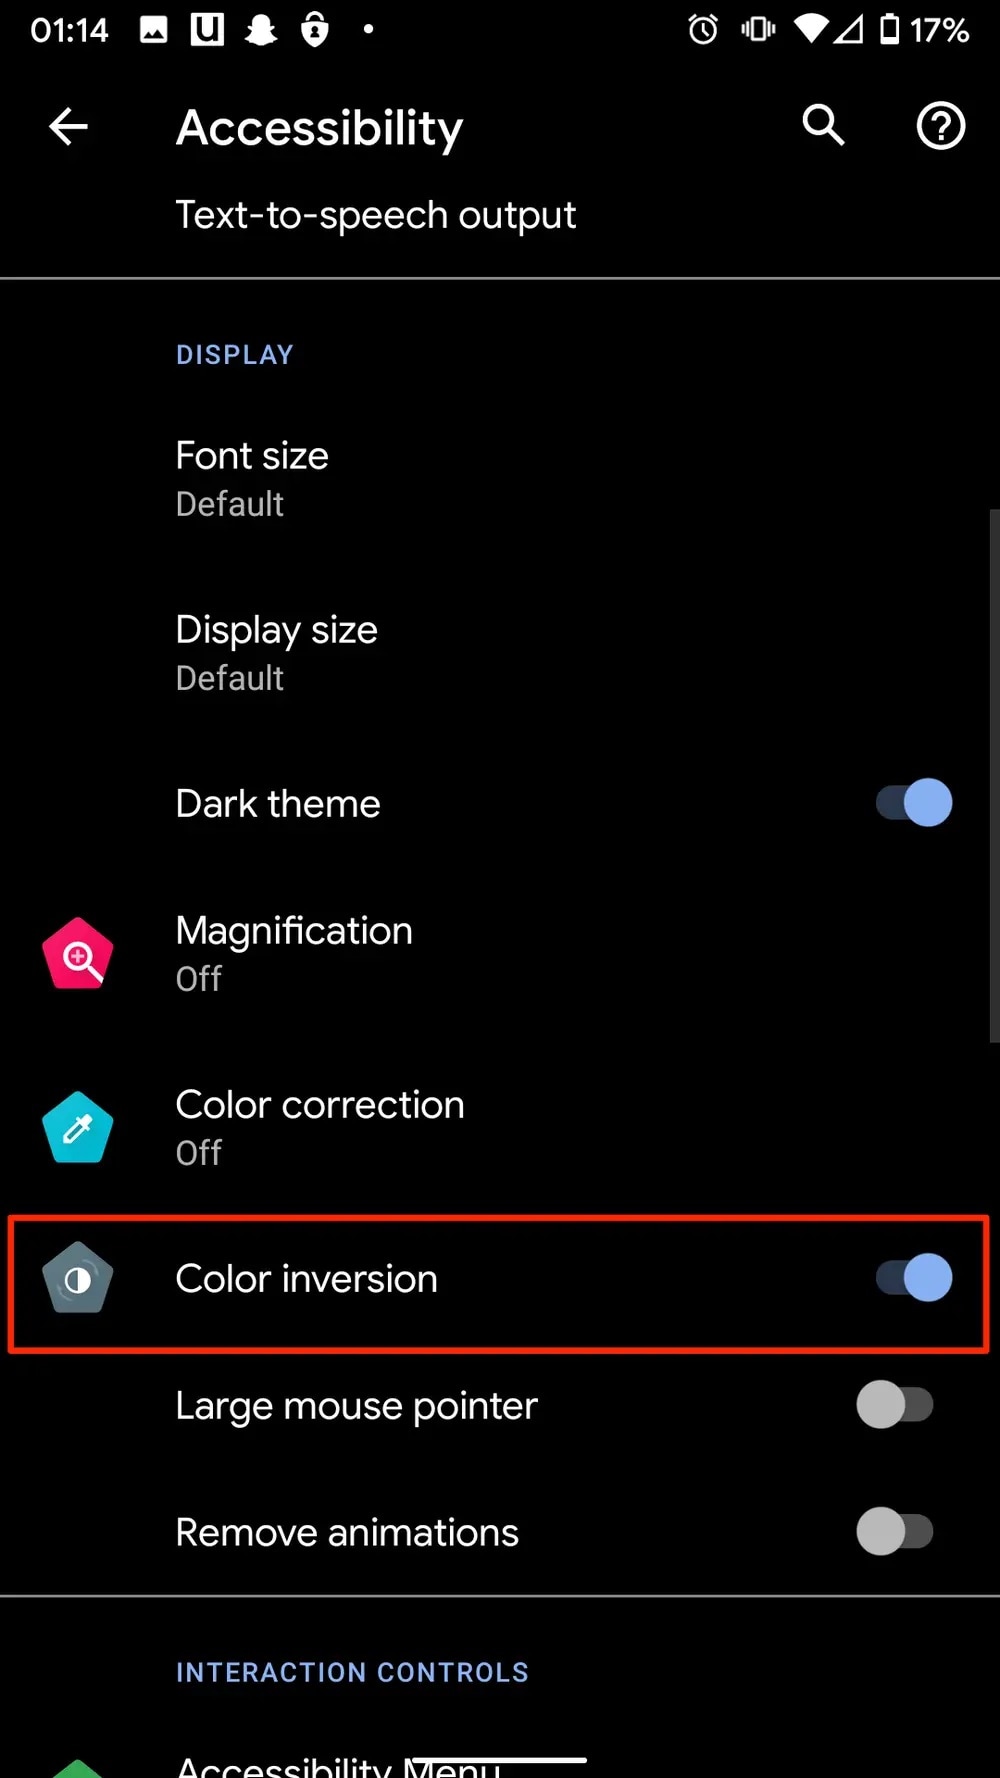 color inversion option turned on